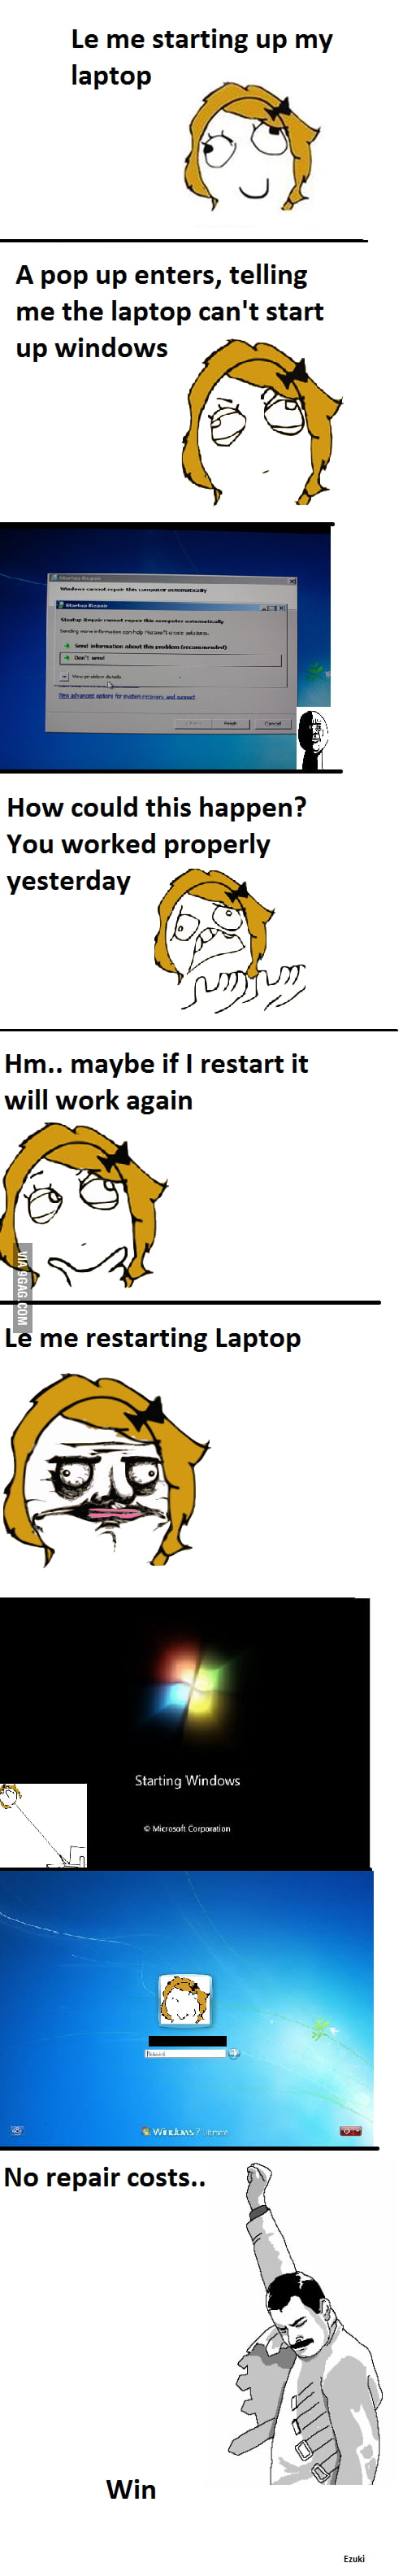 My Laptop 7550